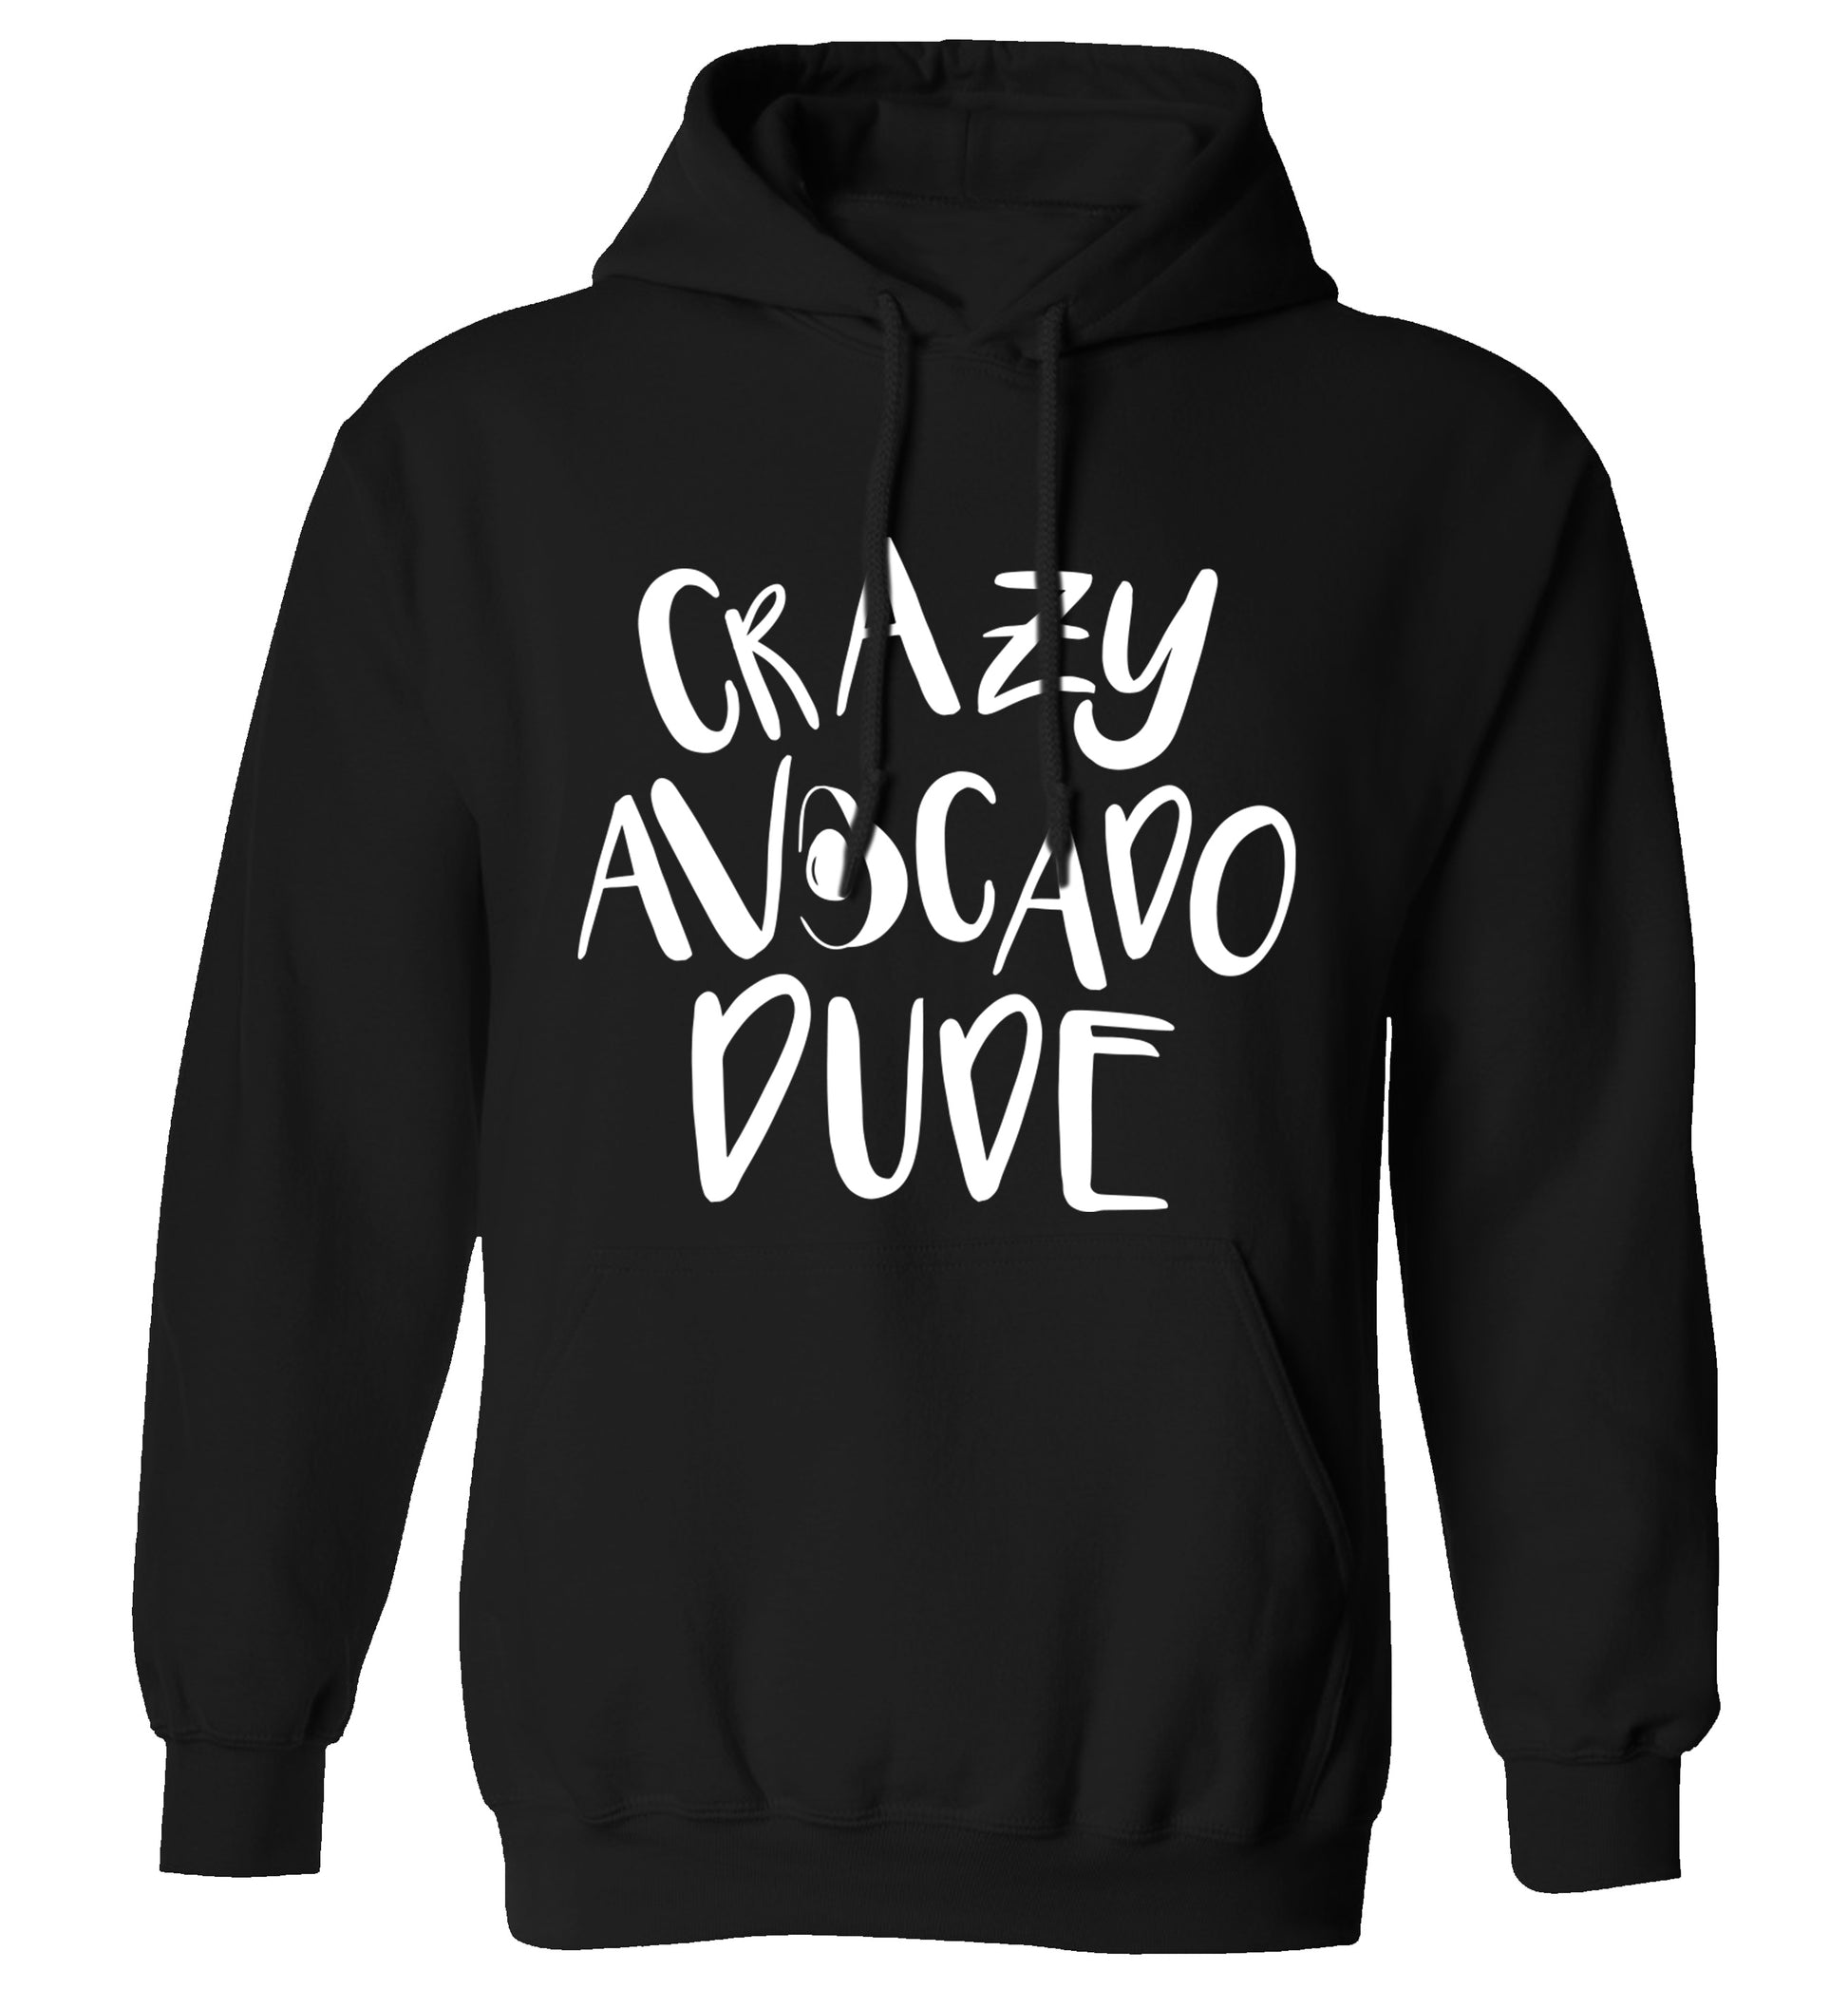 Crazy avocado dude adults unisex black hoodie 2XL